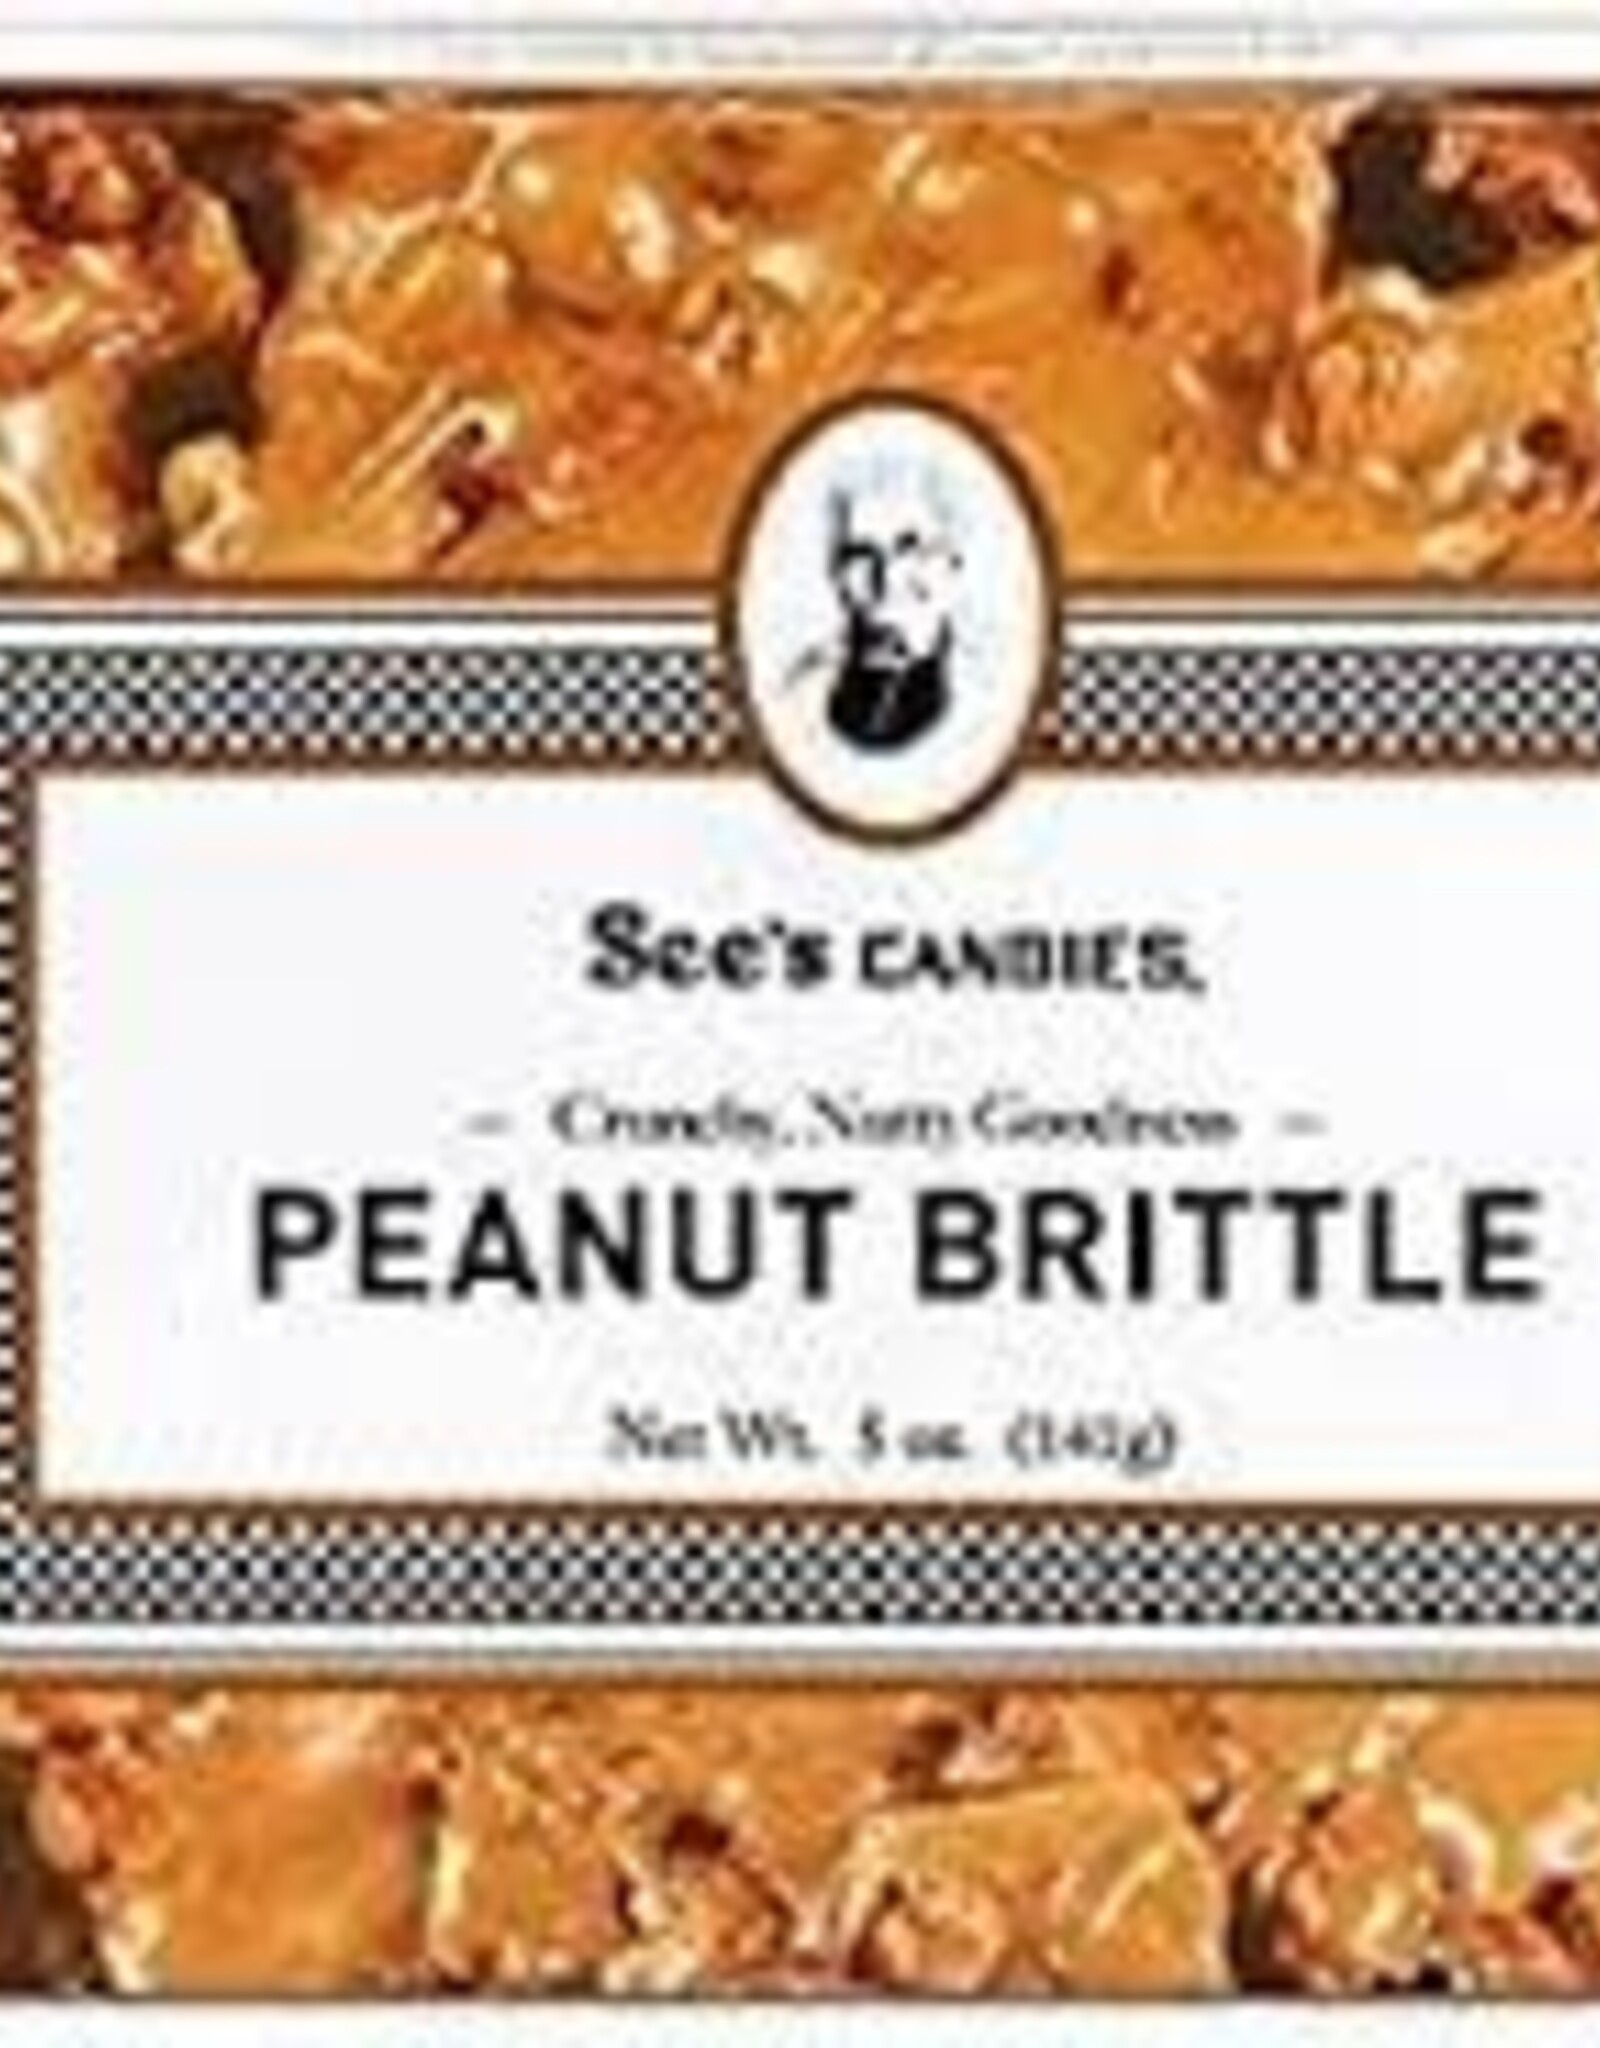 Candy See's Candies - Peanut Brittle 5 oz